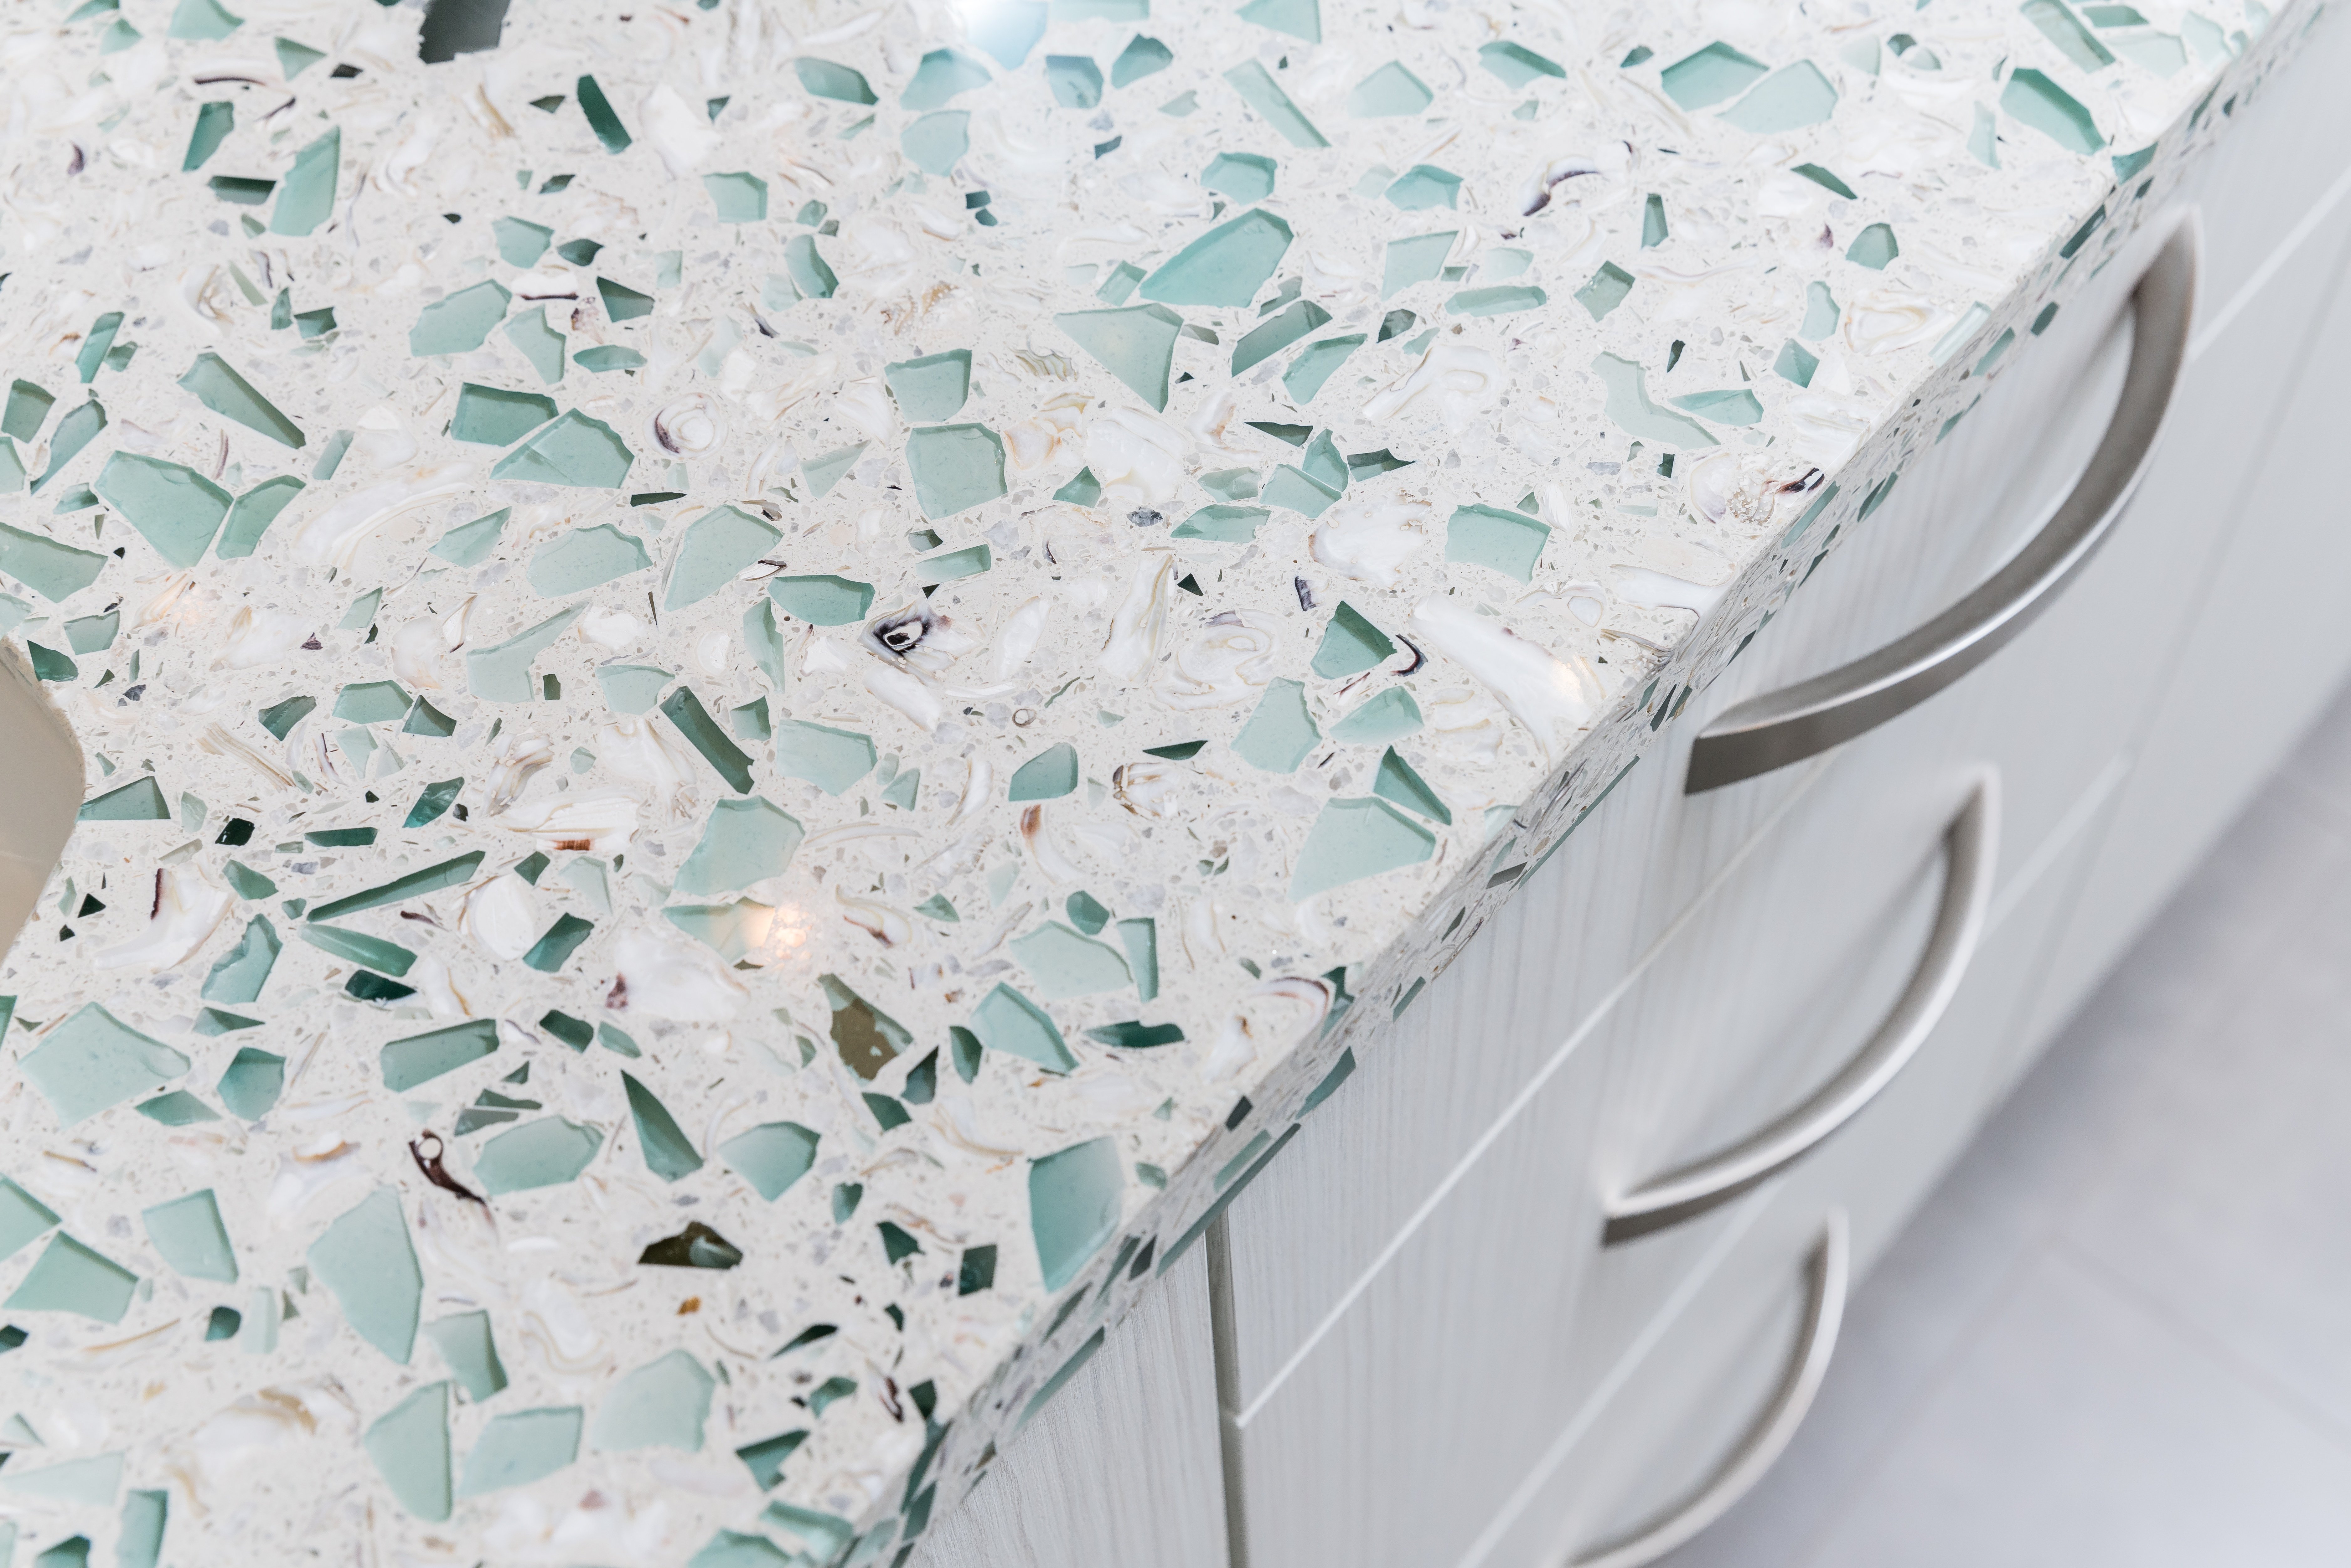 vetrazzo-emerald-coast-recycled-glass-countertop-1